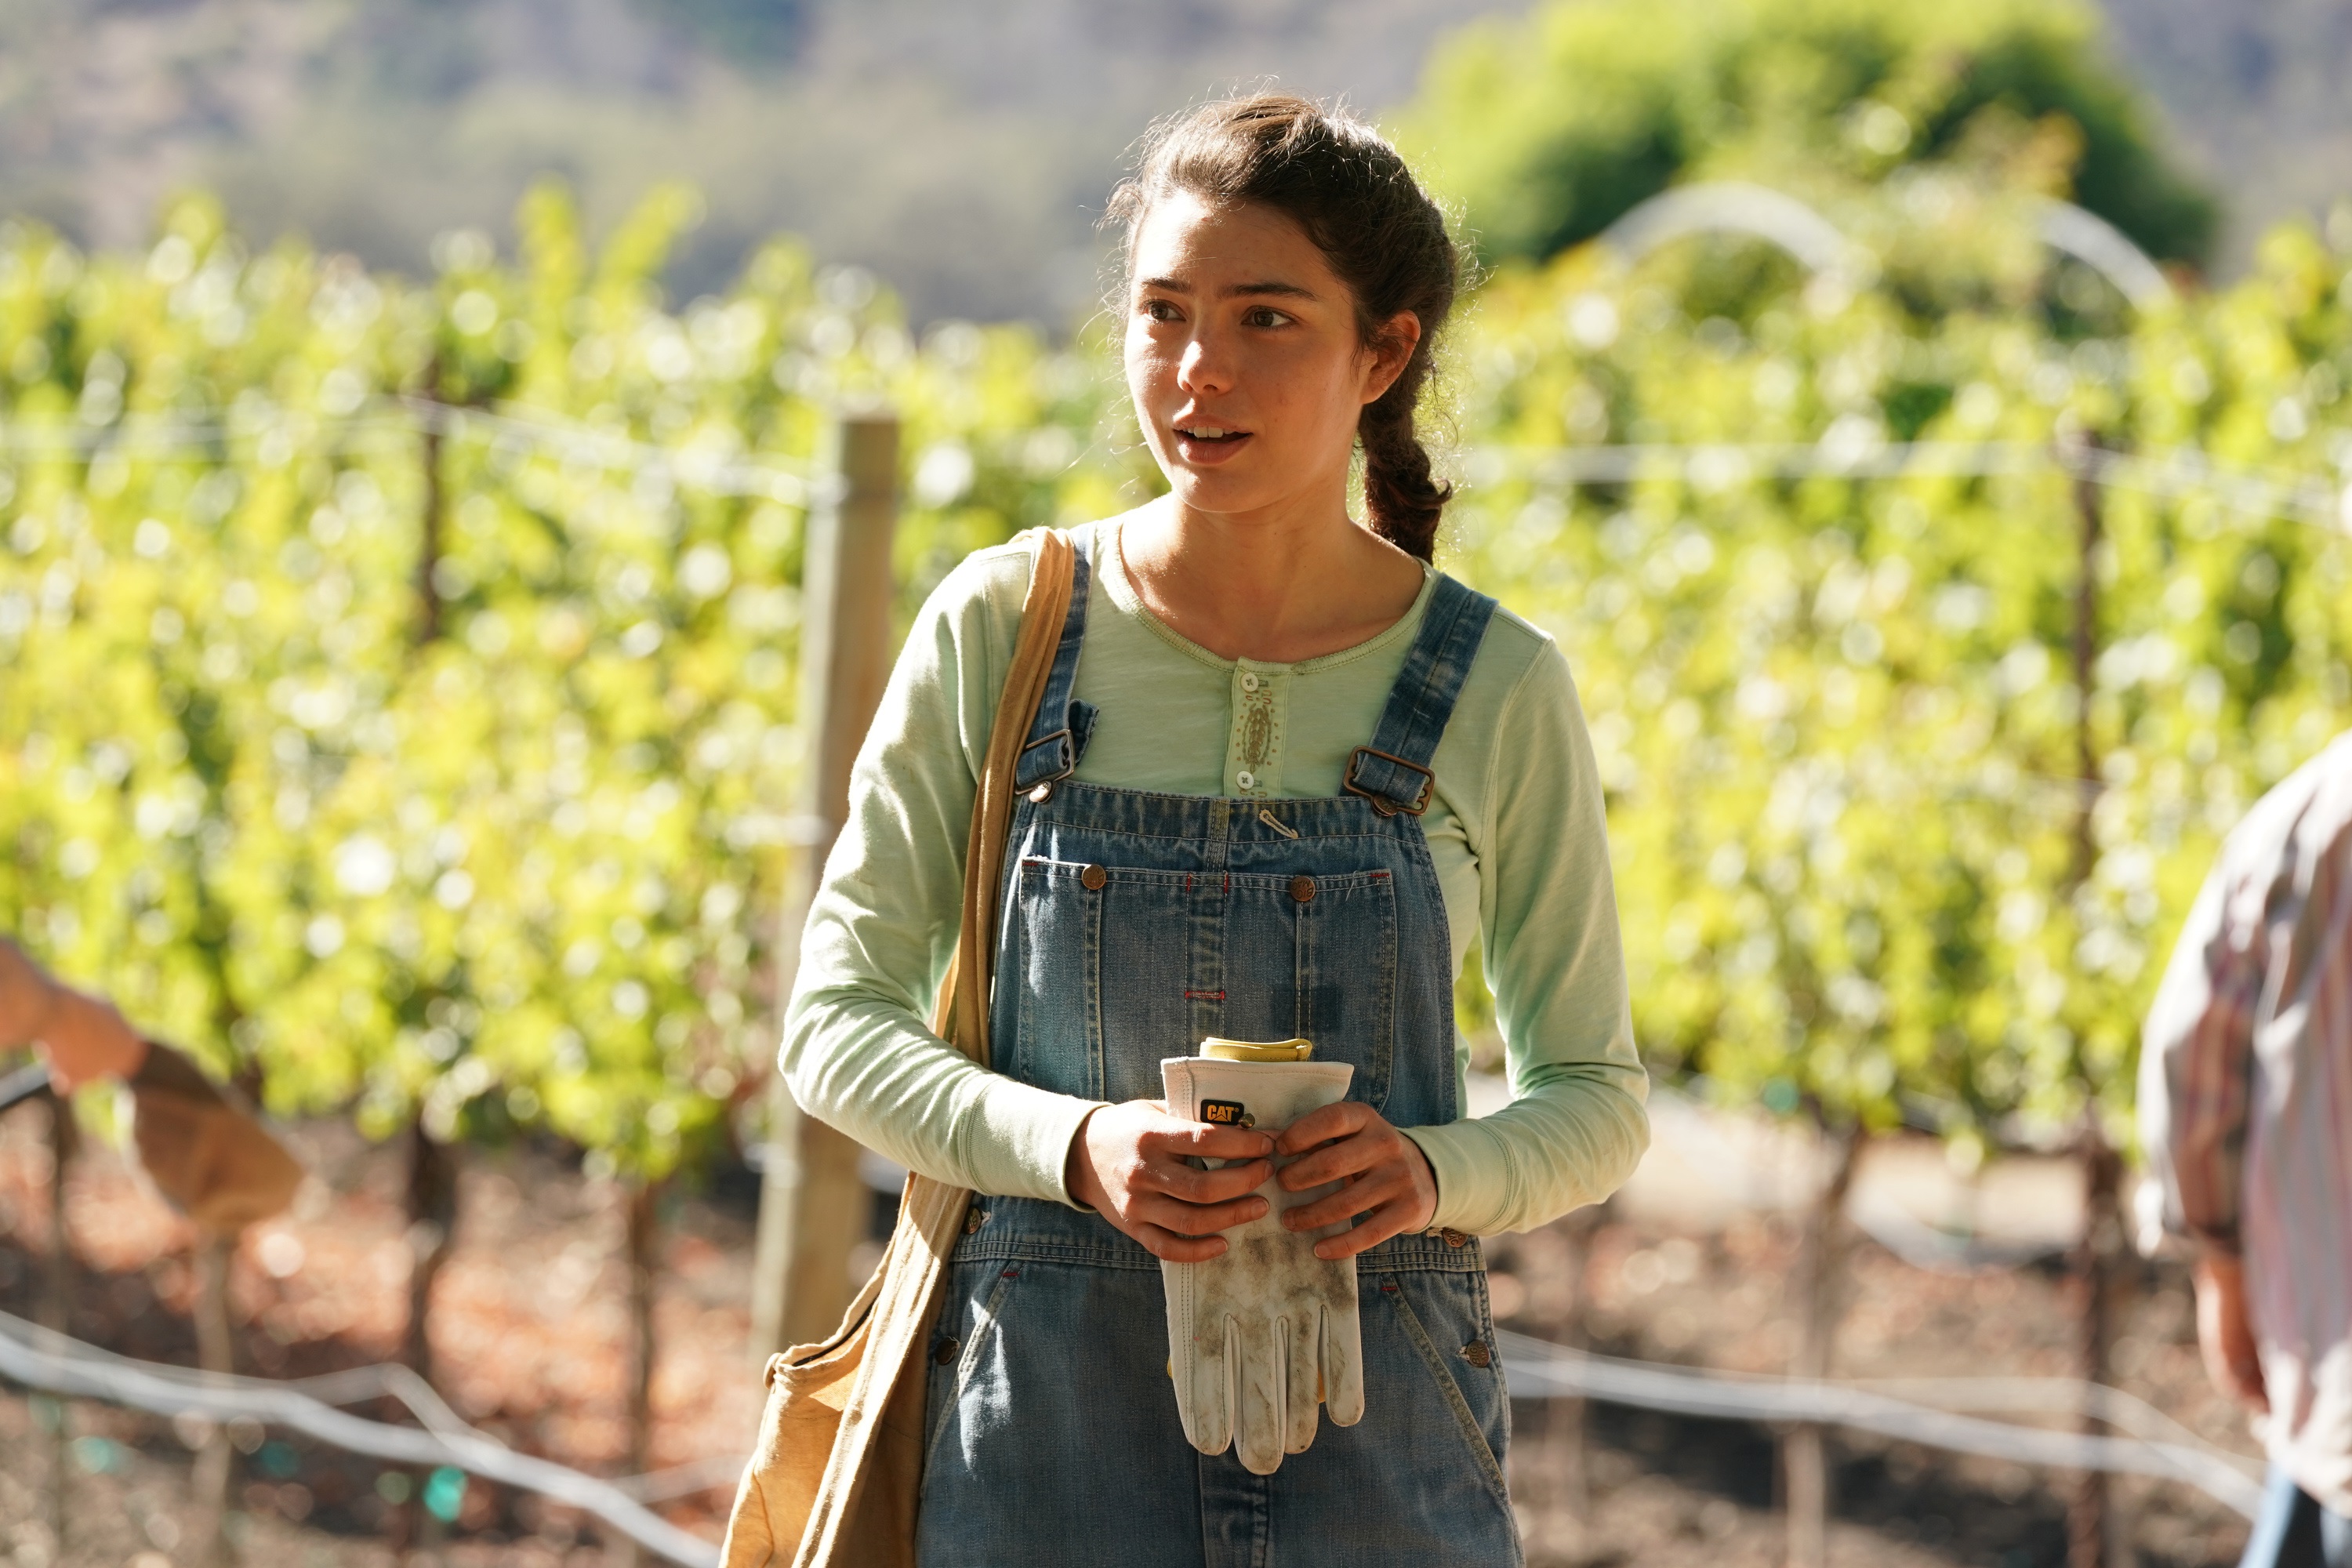 'Promised Land' cast member Katya Martín standing in a vineyard field